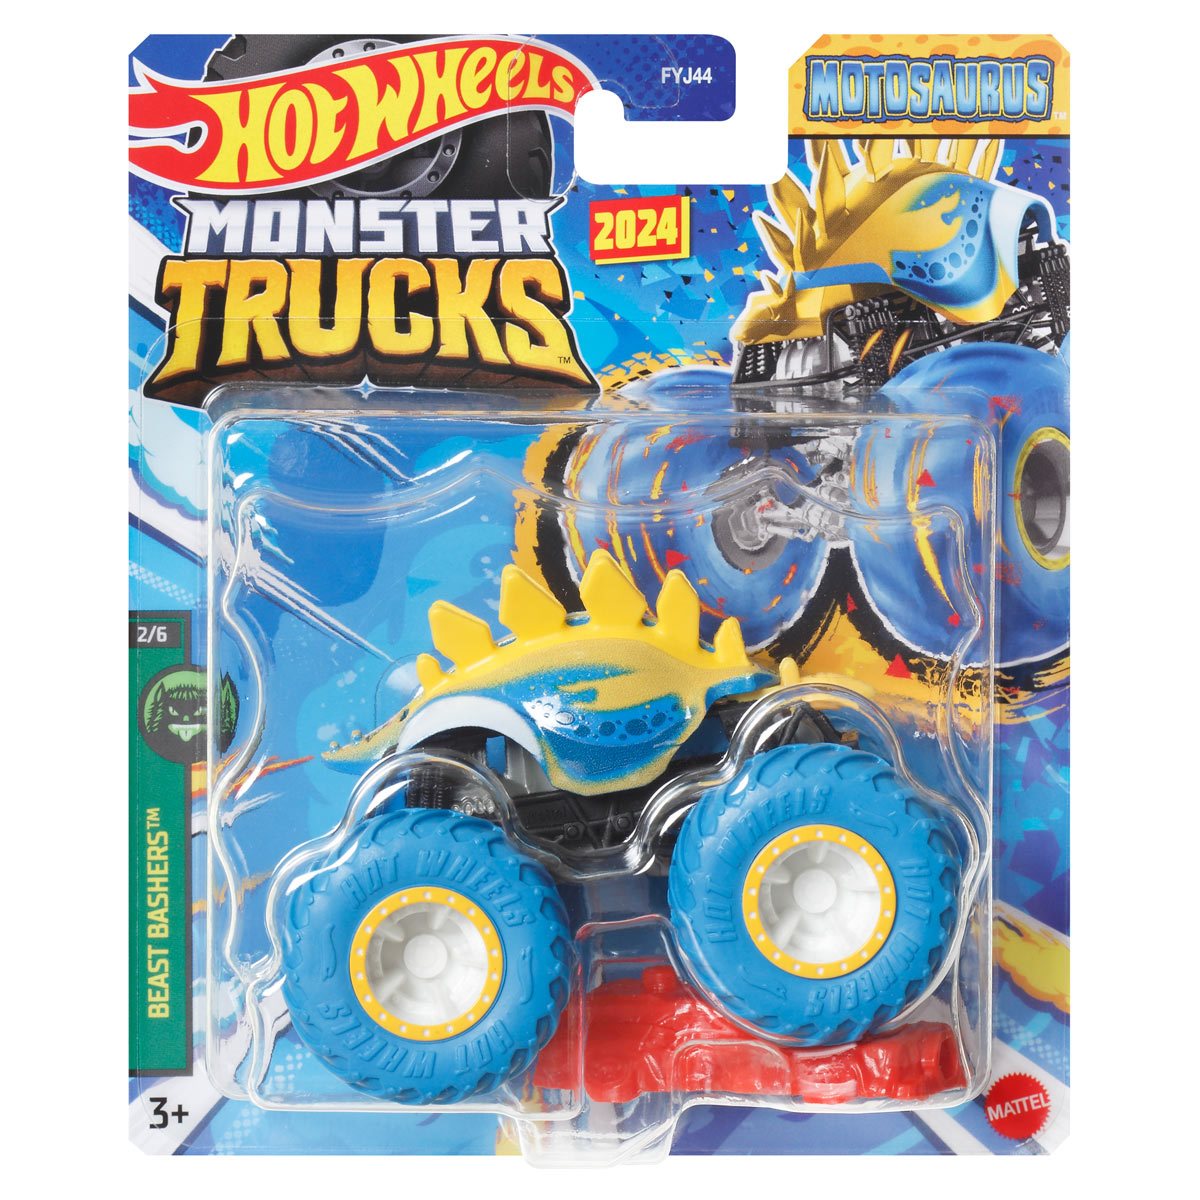 Hot Wheels Monster Trucks Demolition Doubles 1:64 Scale 2023 Mix 5